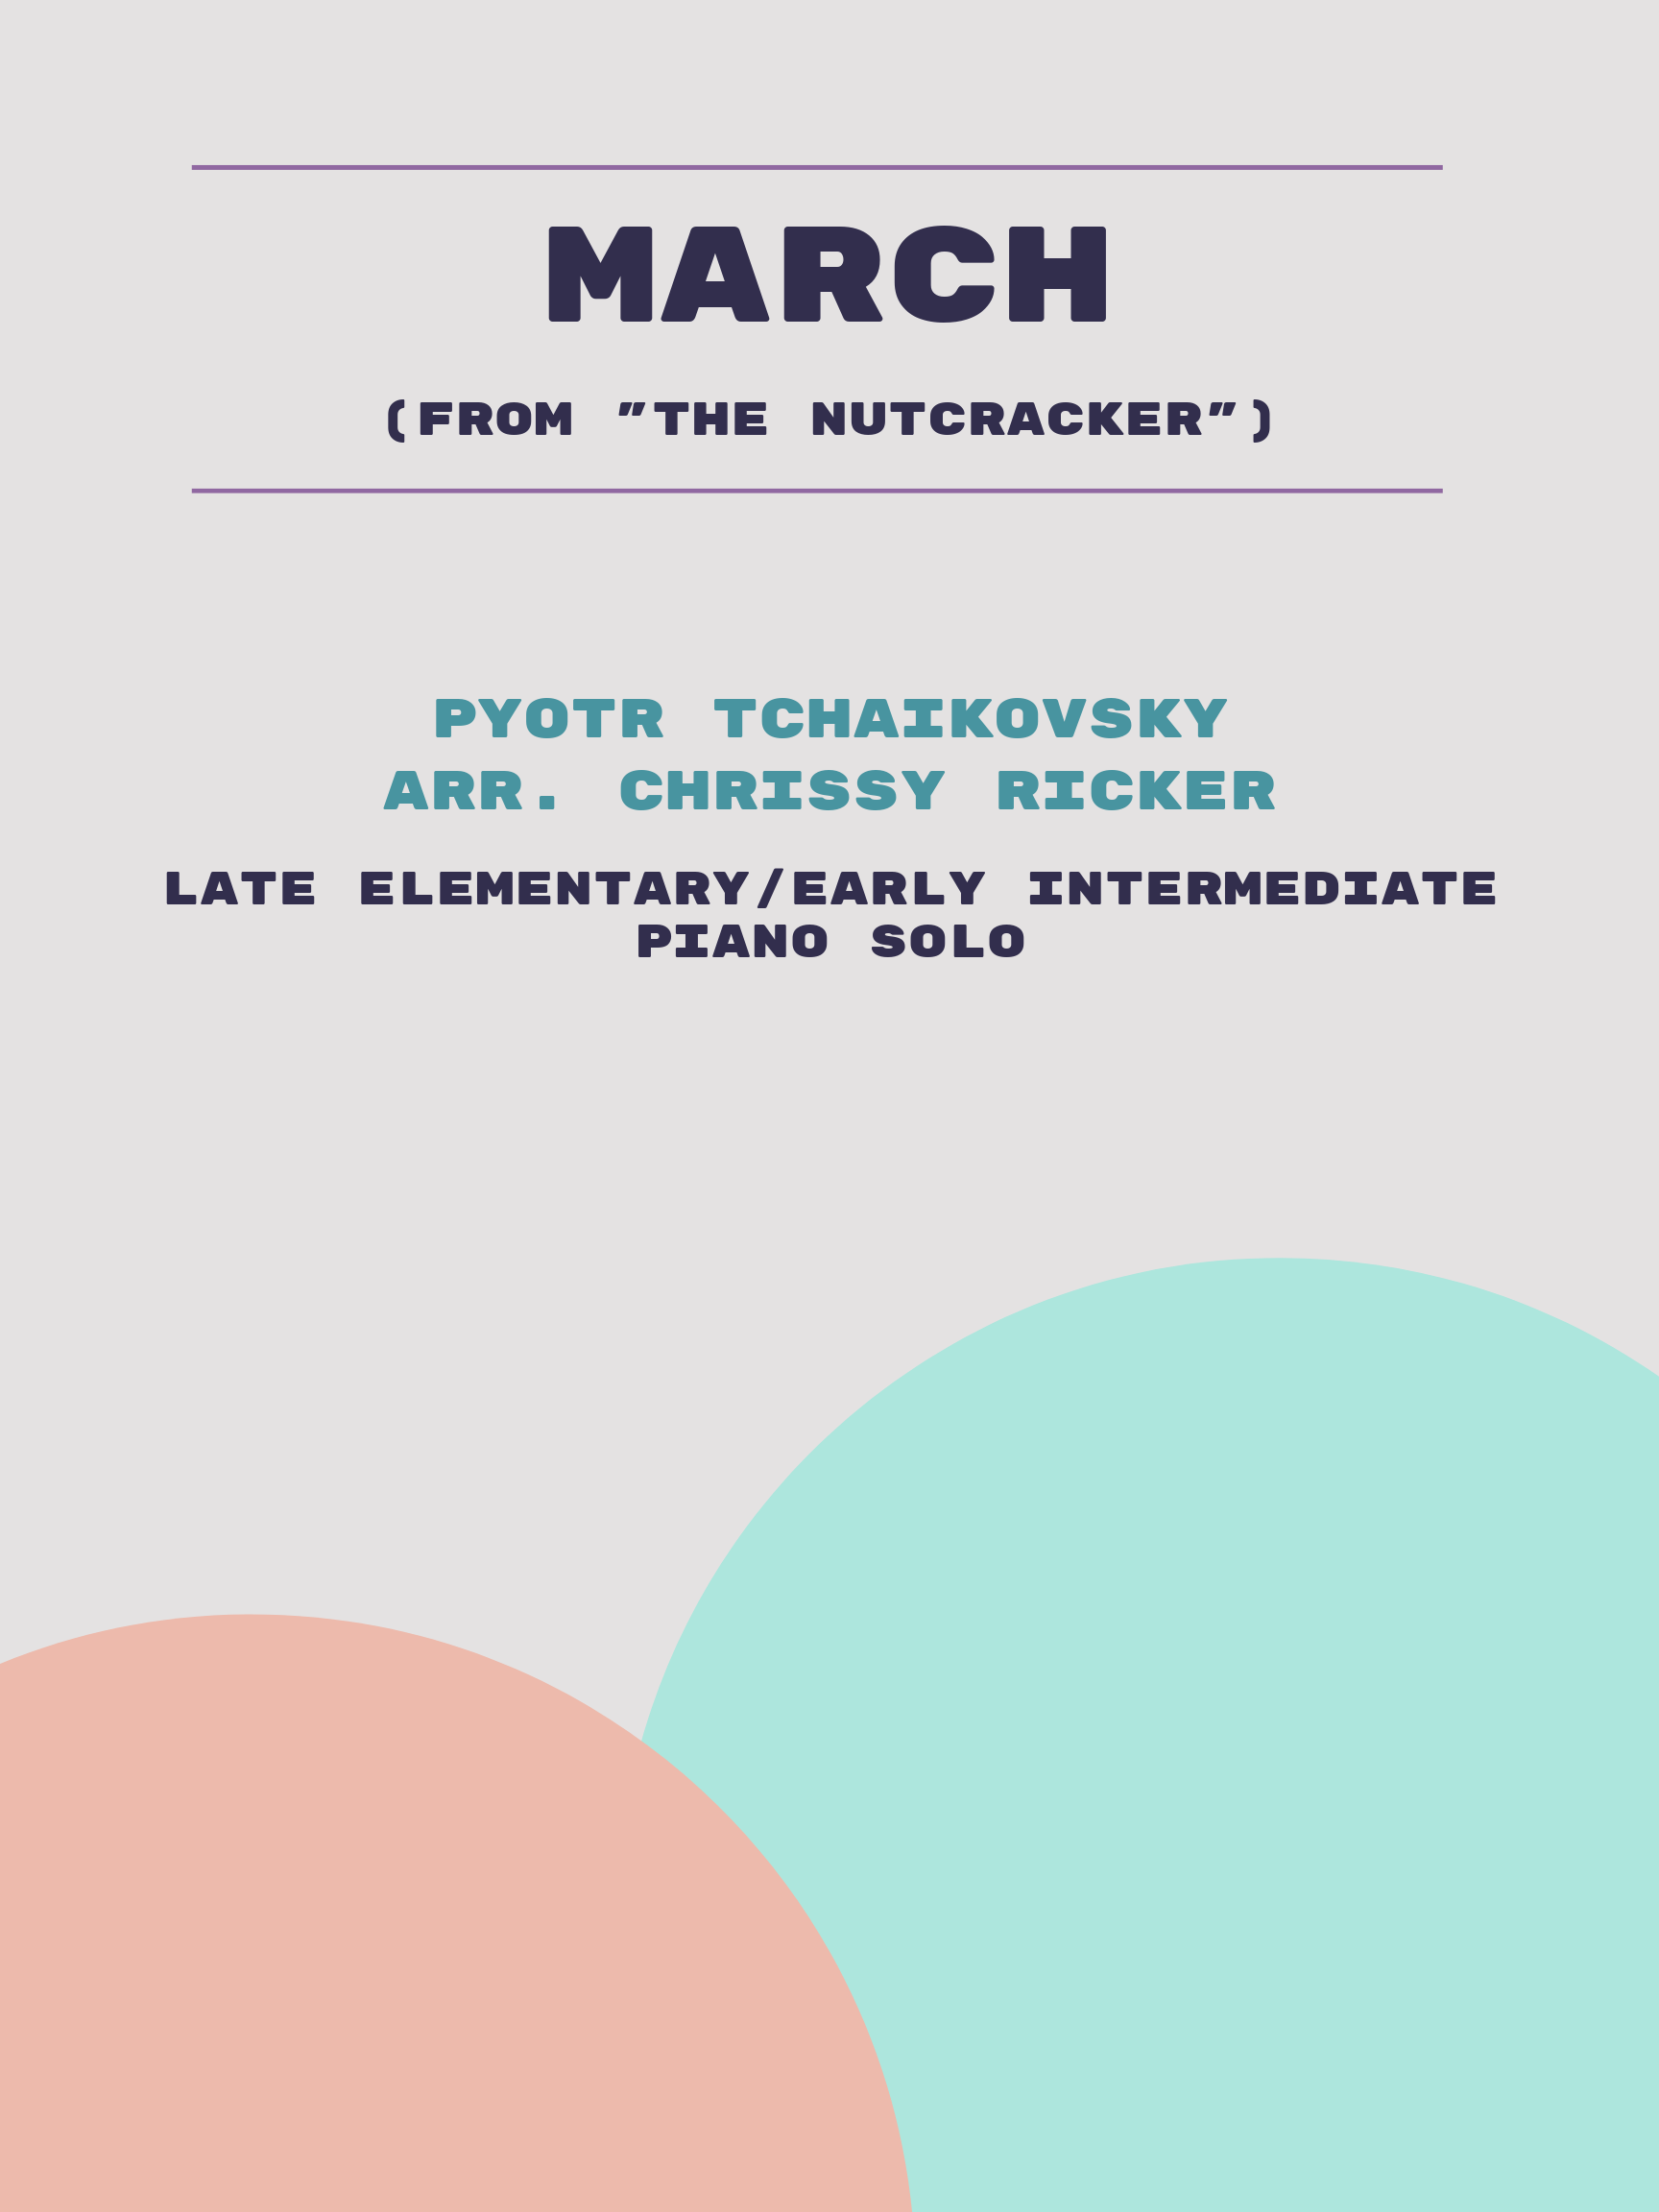 March by Pyotr Tchaikovsky